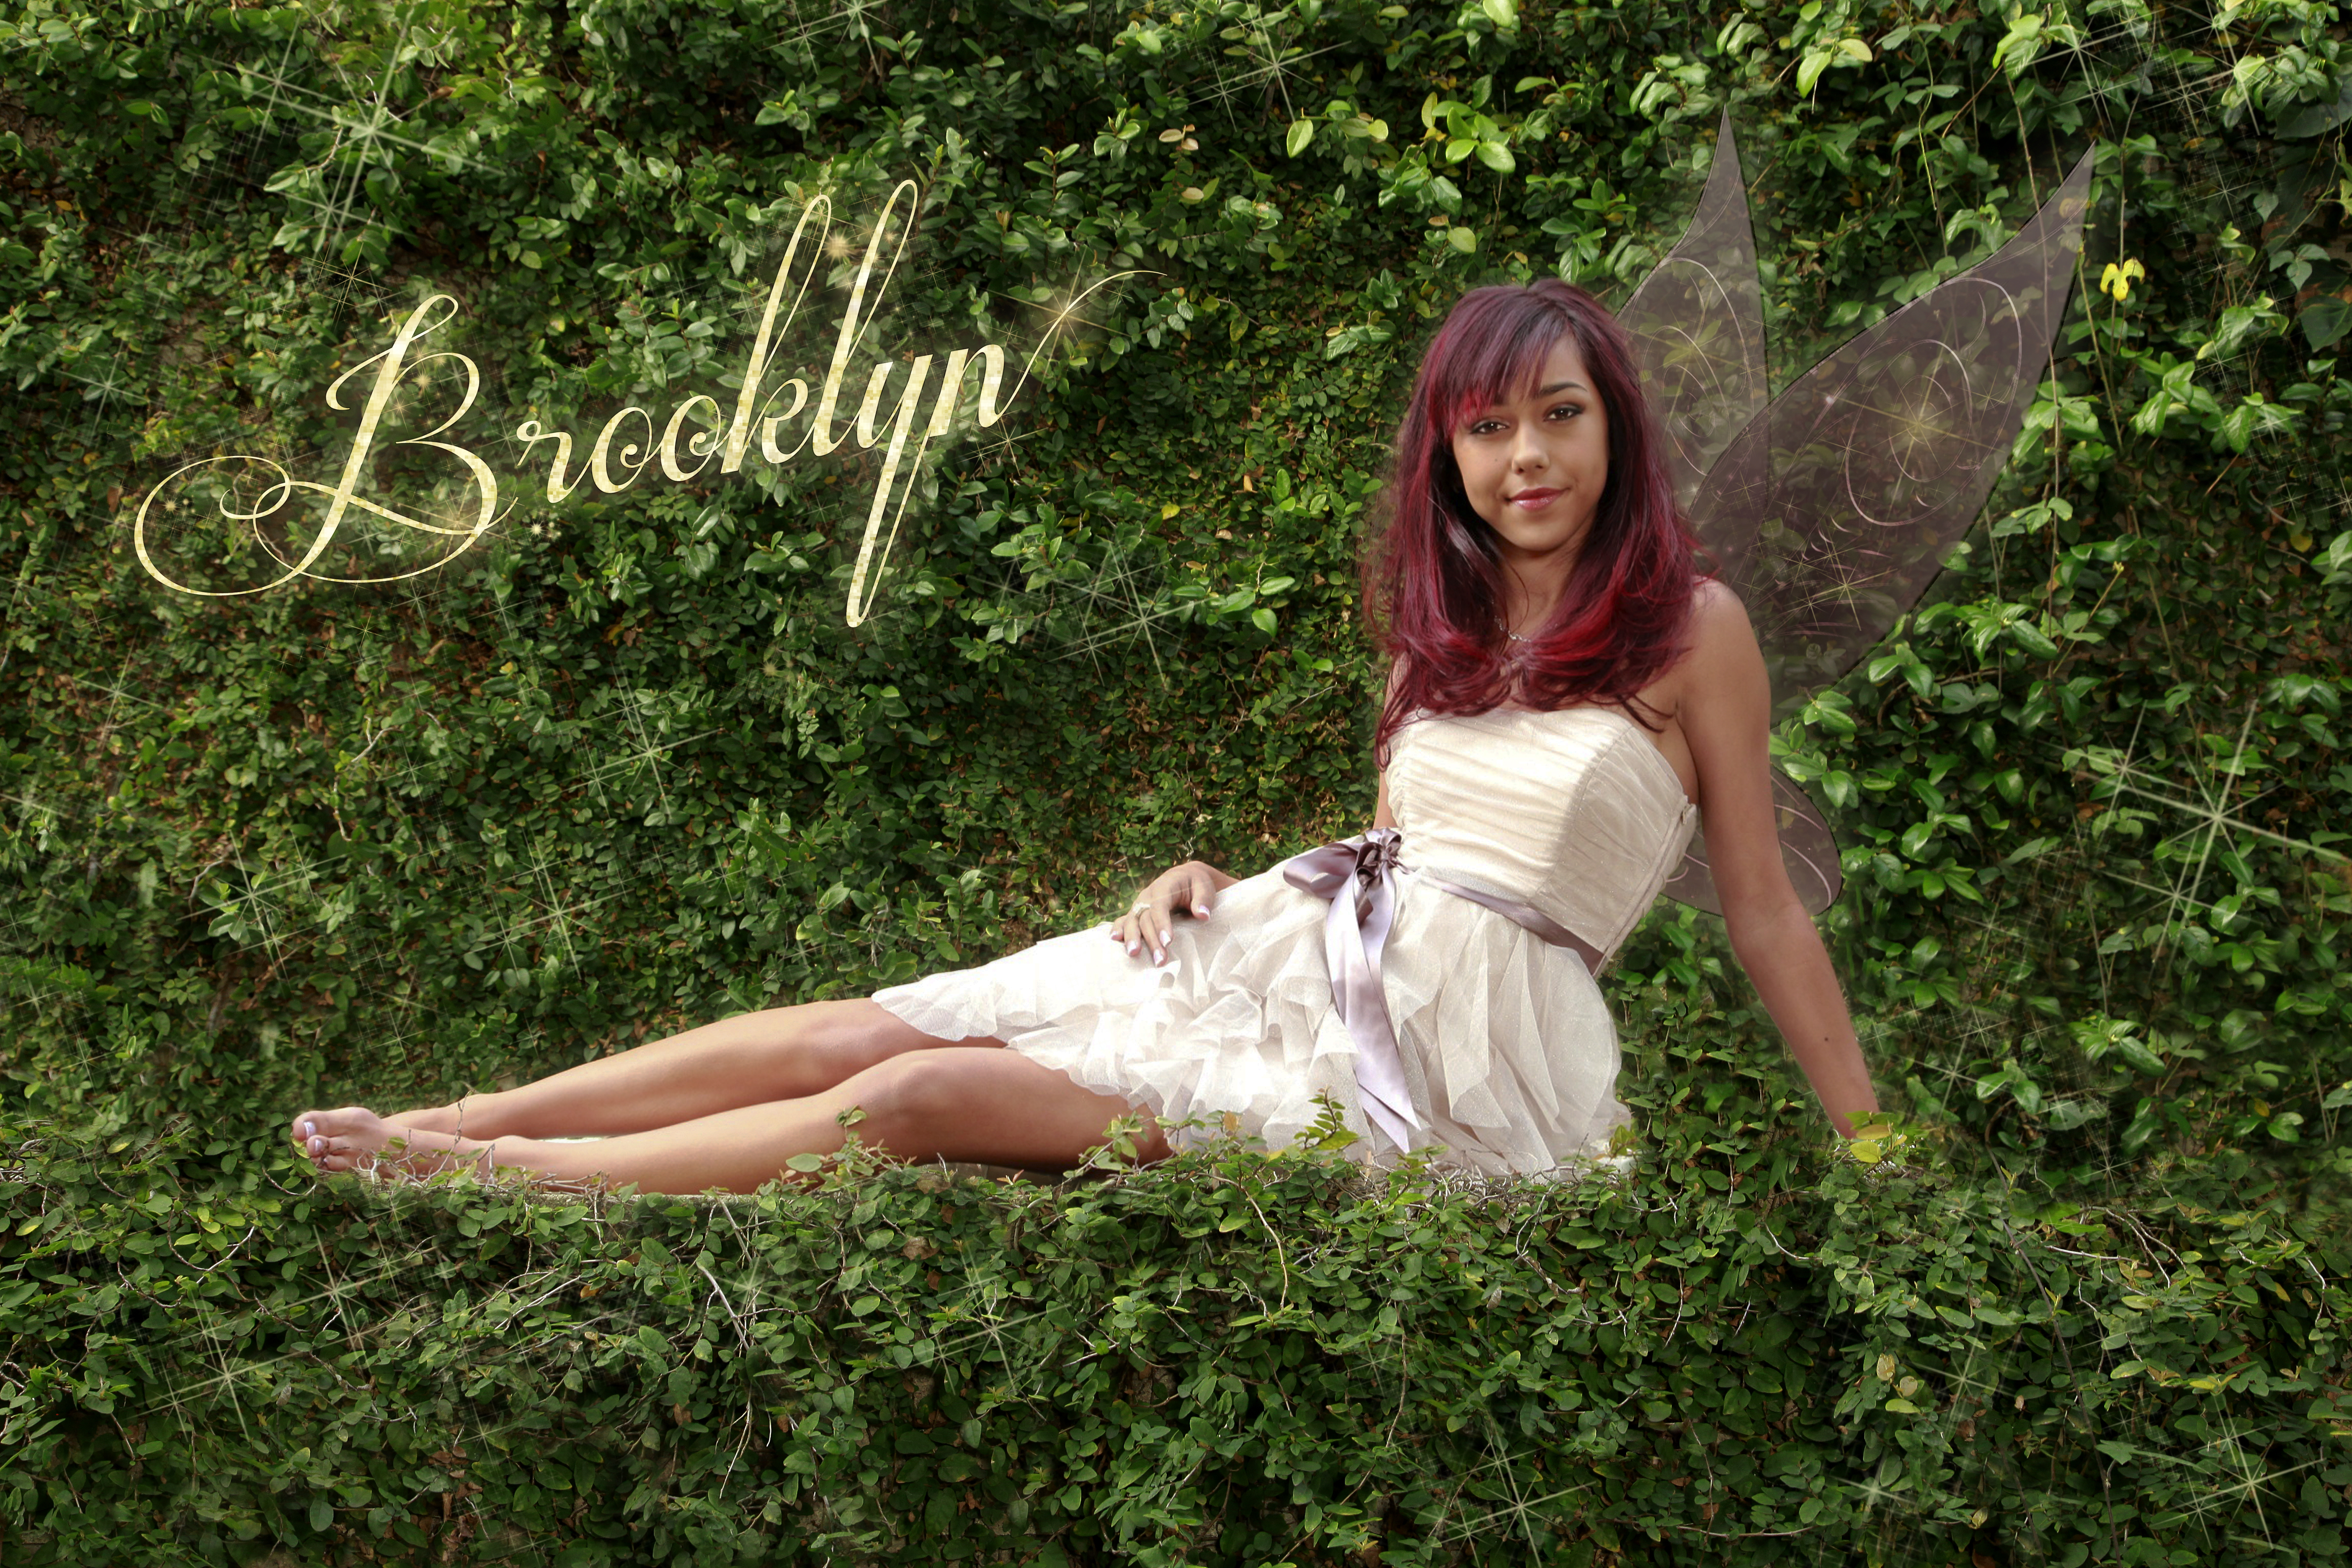 BROOKLYN HALEY, Fairy Poster Shoot. Carlos Rios Photographer, Kimberly Webb poster Design.